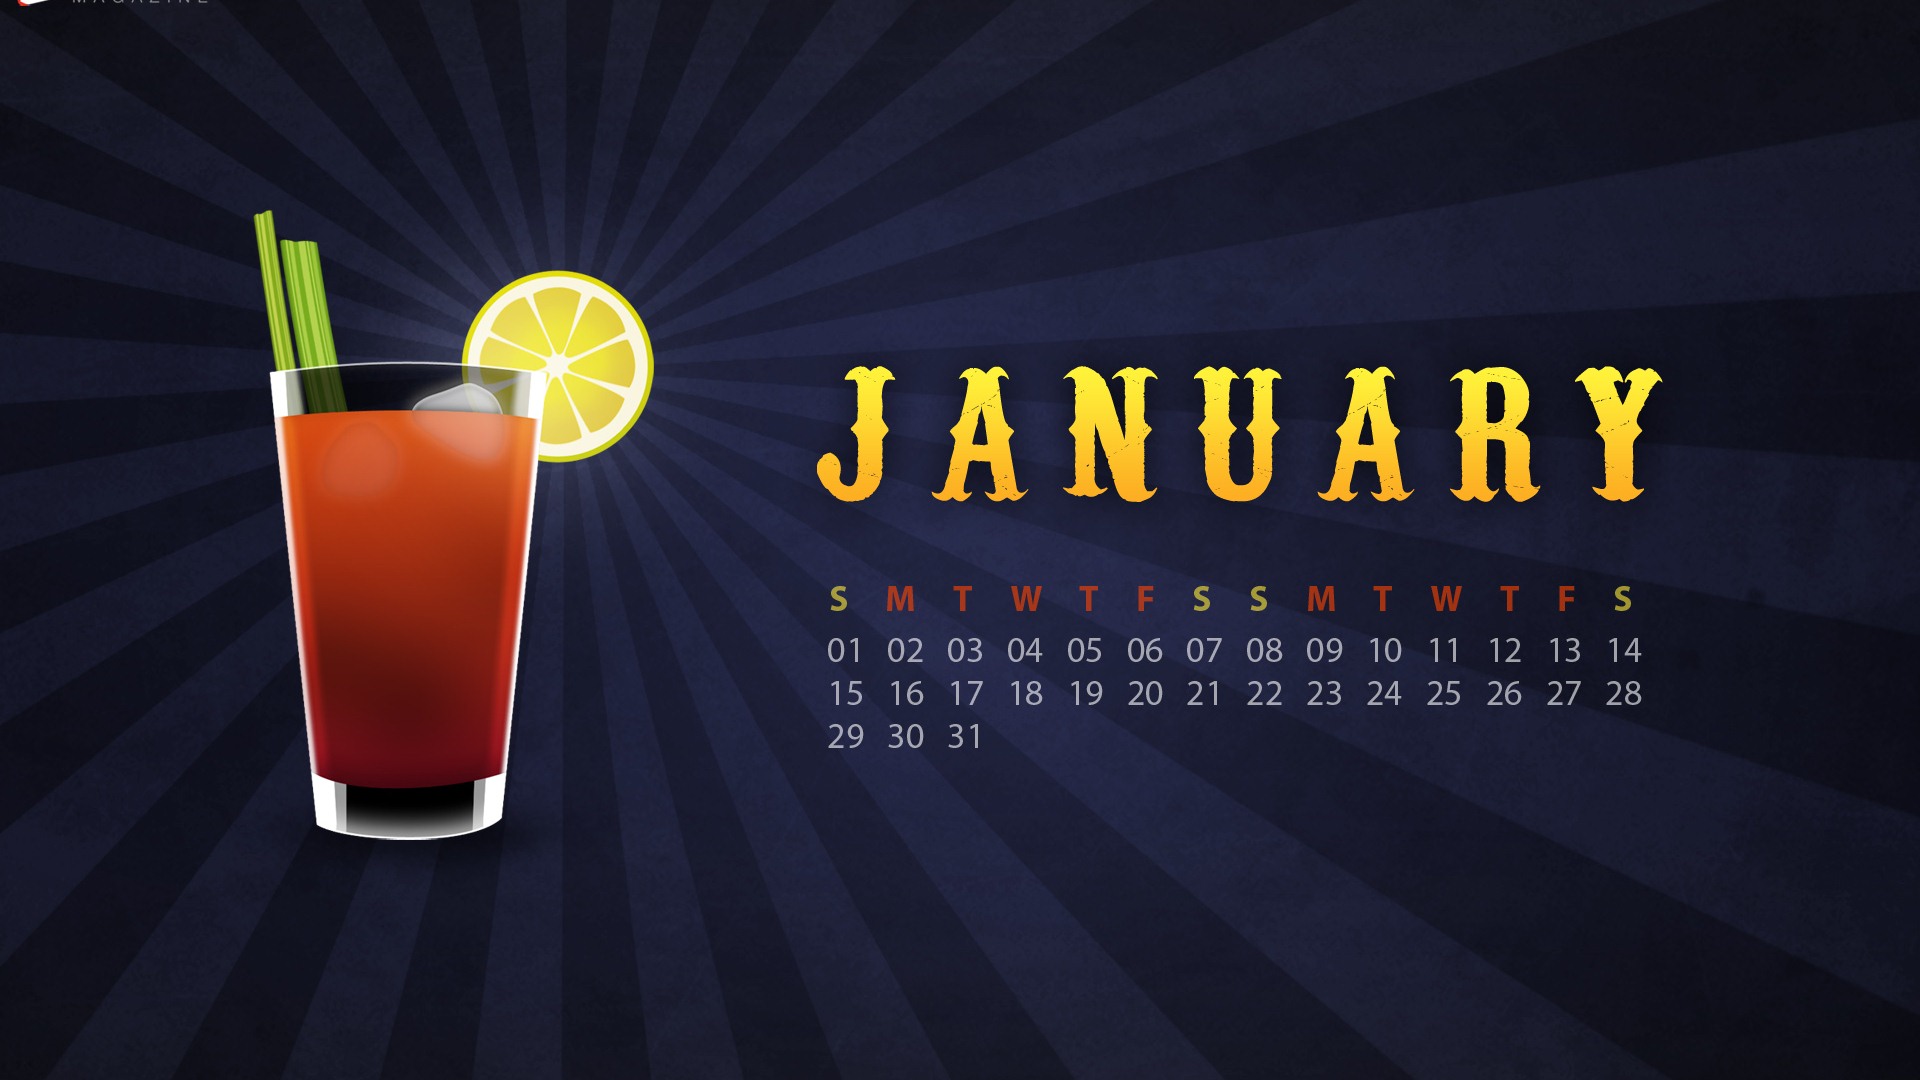 January 2012 Calendar Wallpapers #4 - 1920x1080